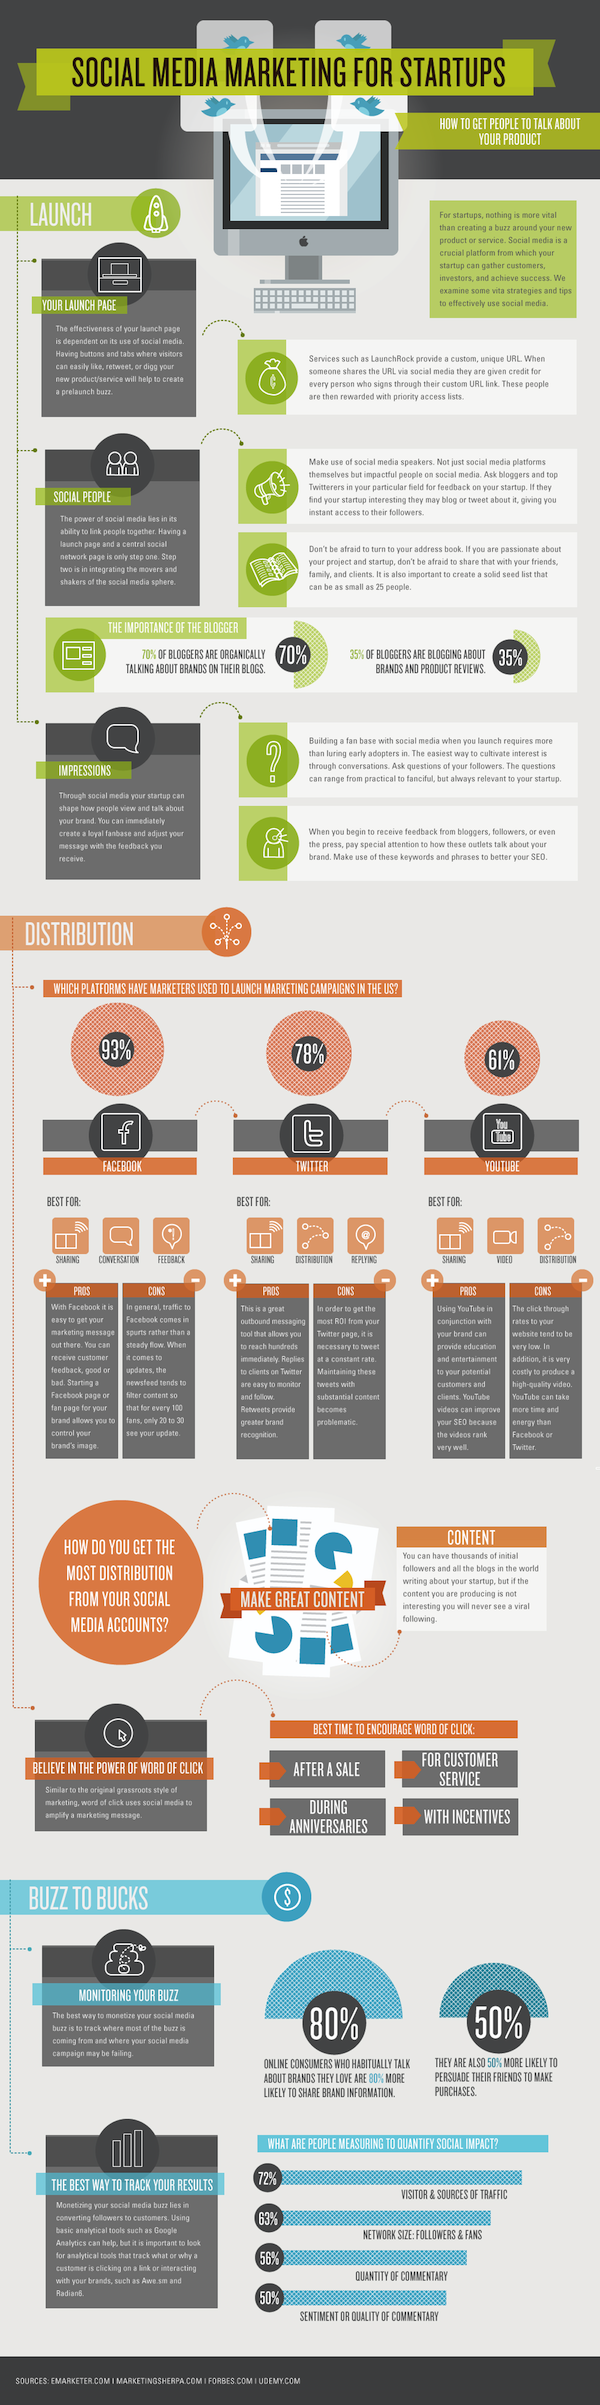 social media marketing for startups infographic